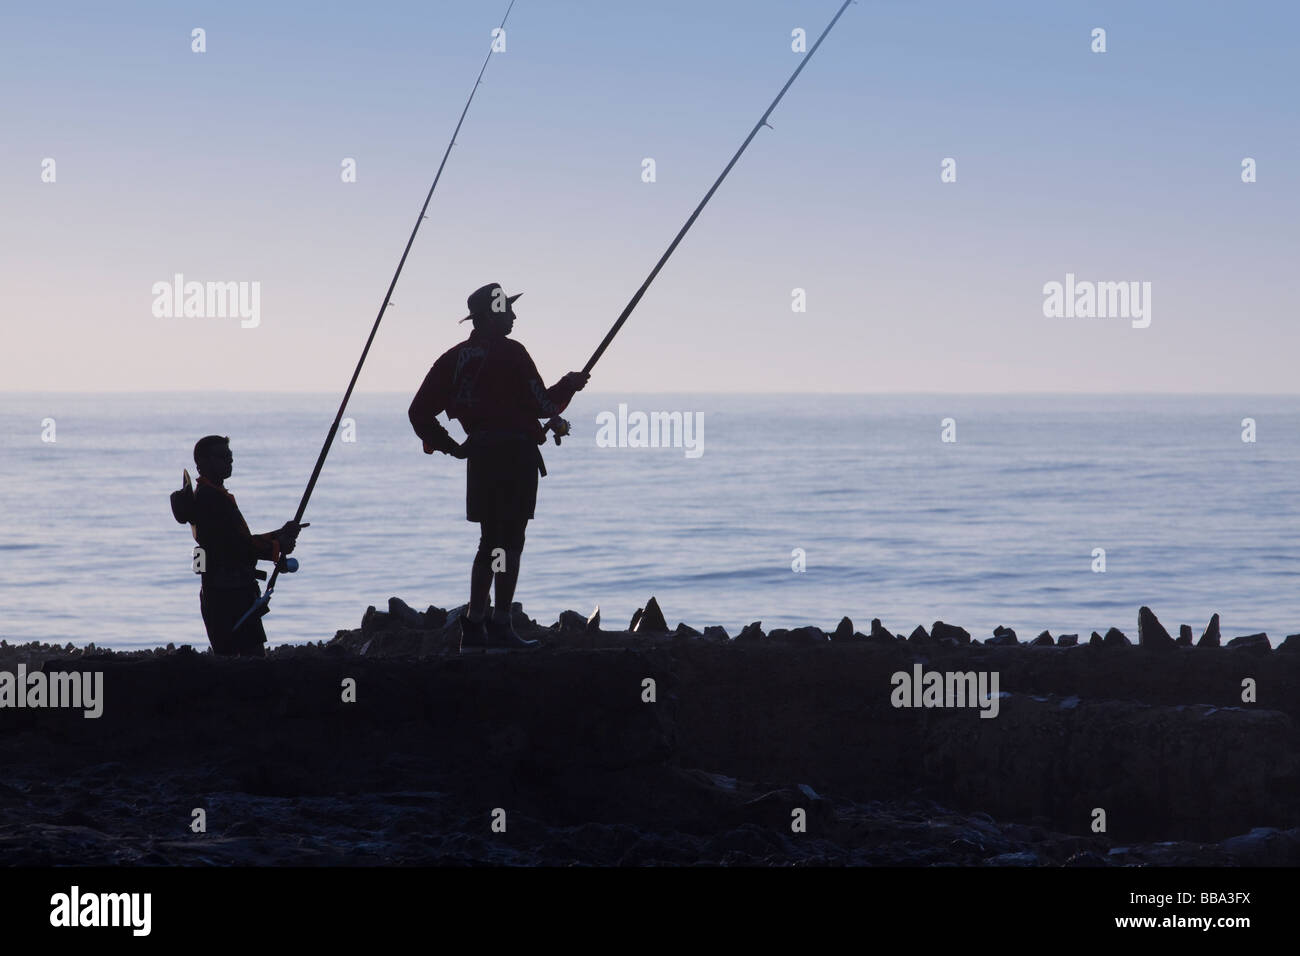 Two fisherman in silhouette at dawn fishing off seaside rocks. Backlit. Silhouette. Durban, KwaZulu Natal, South Africa. Stock Photo